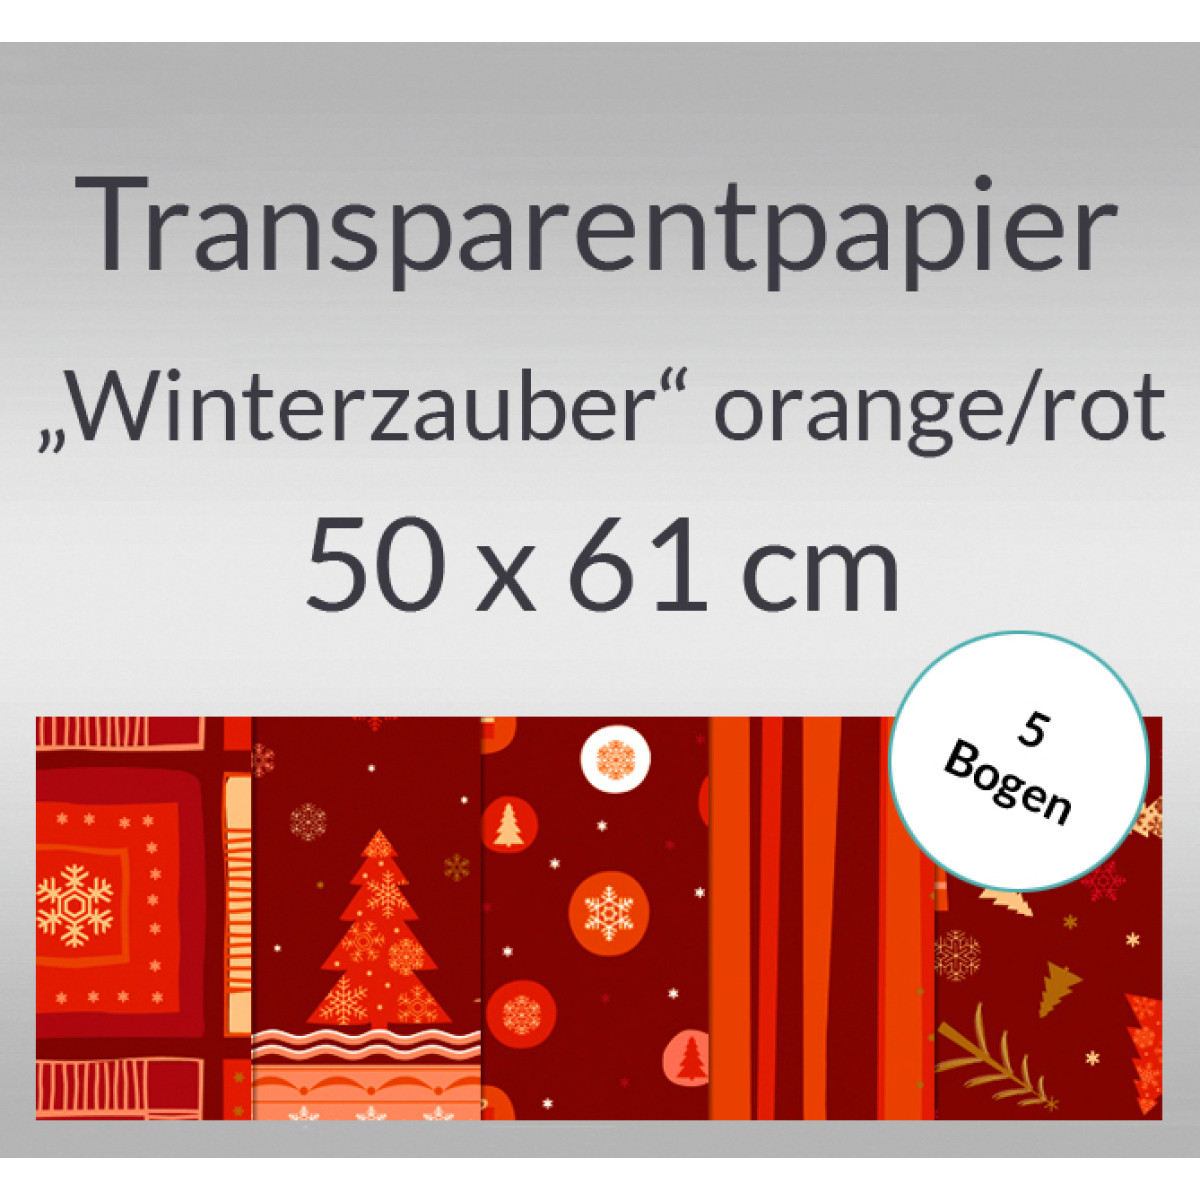 Transparentpapier "Winterzauber" orange/rot 50 x 61 cm - 5 Bogen